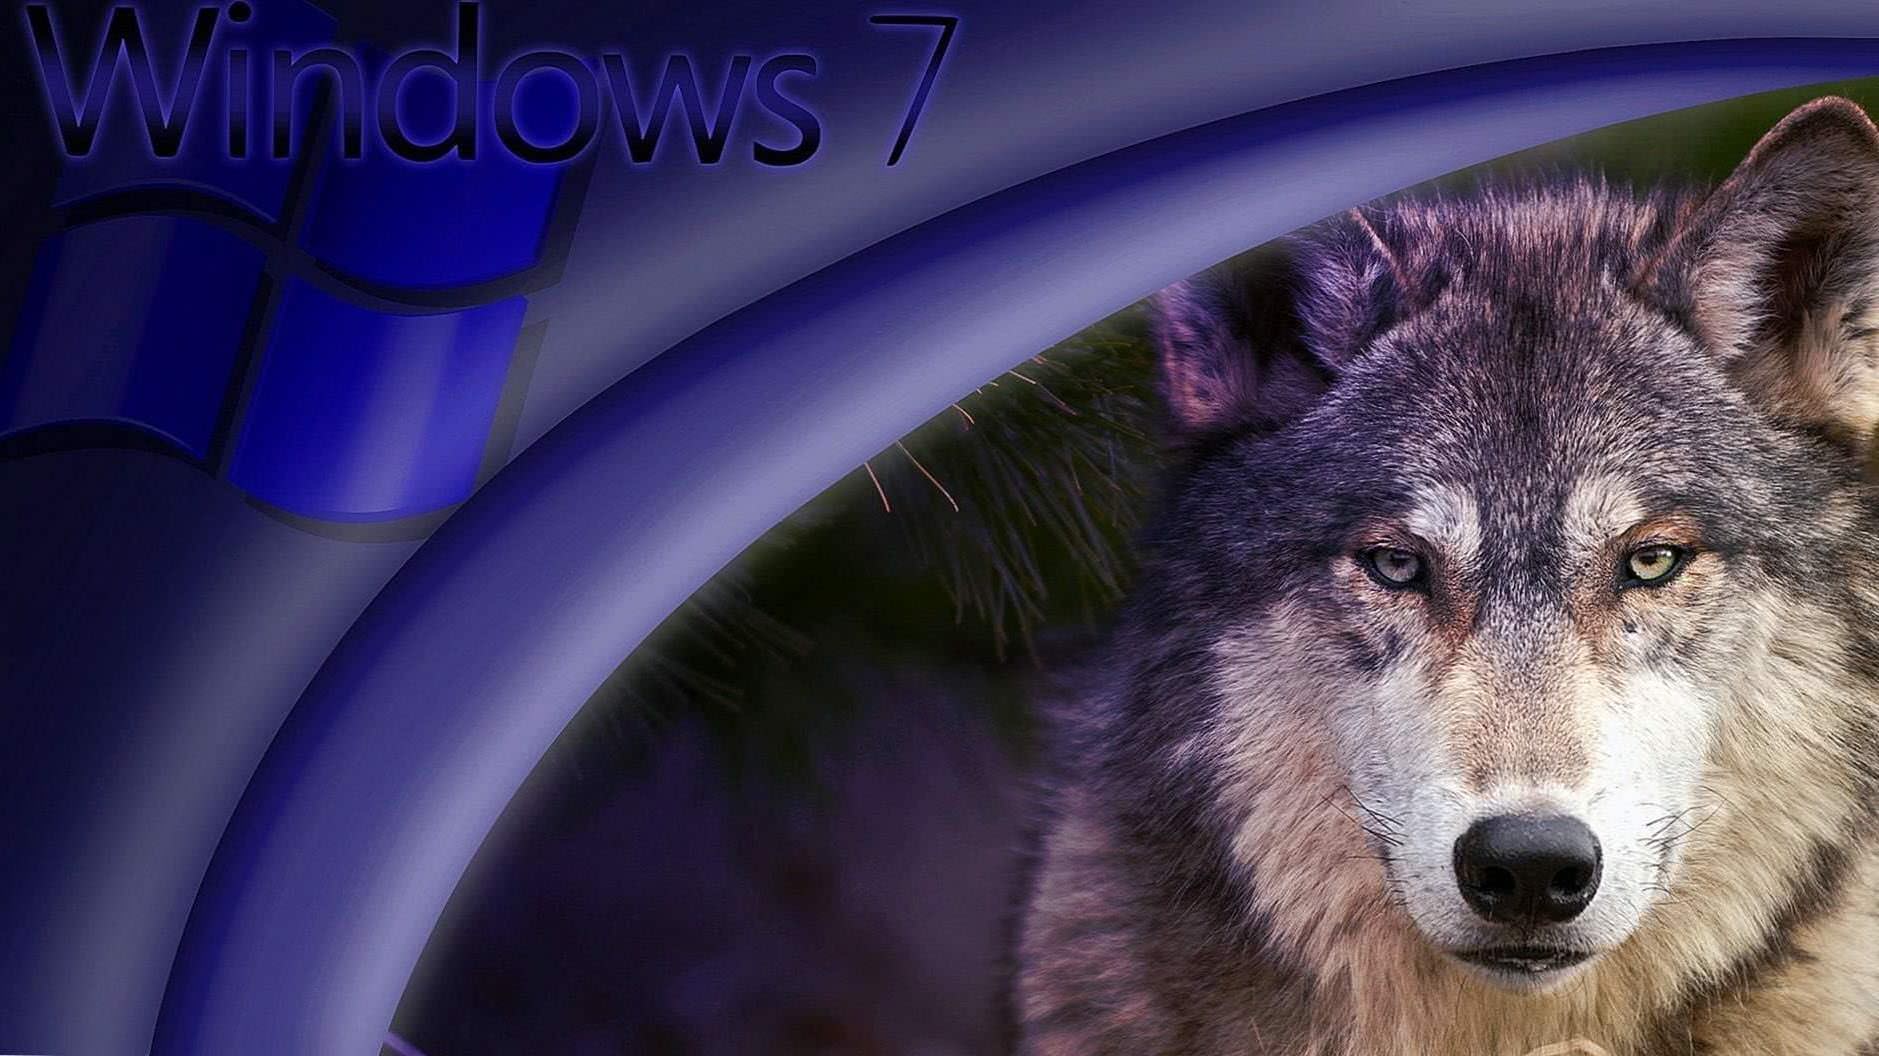 Windows 7 Wolf Wallpaper Image 2